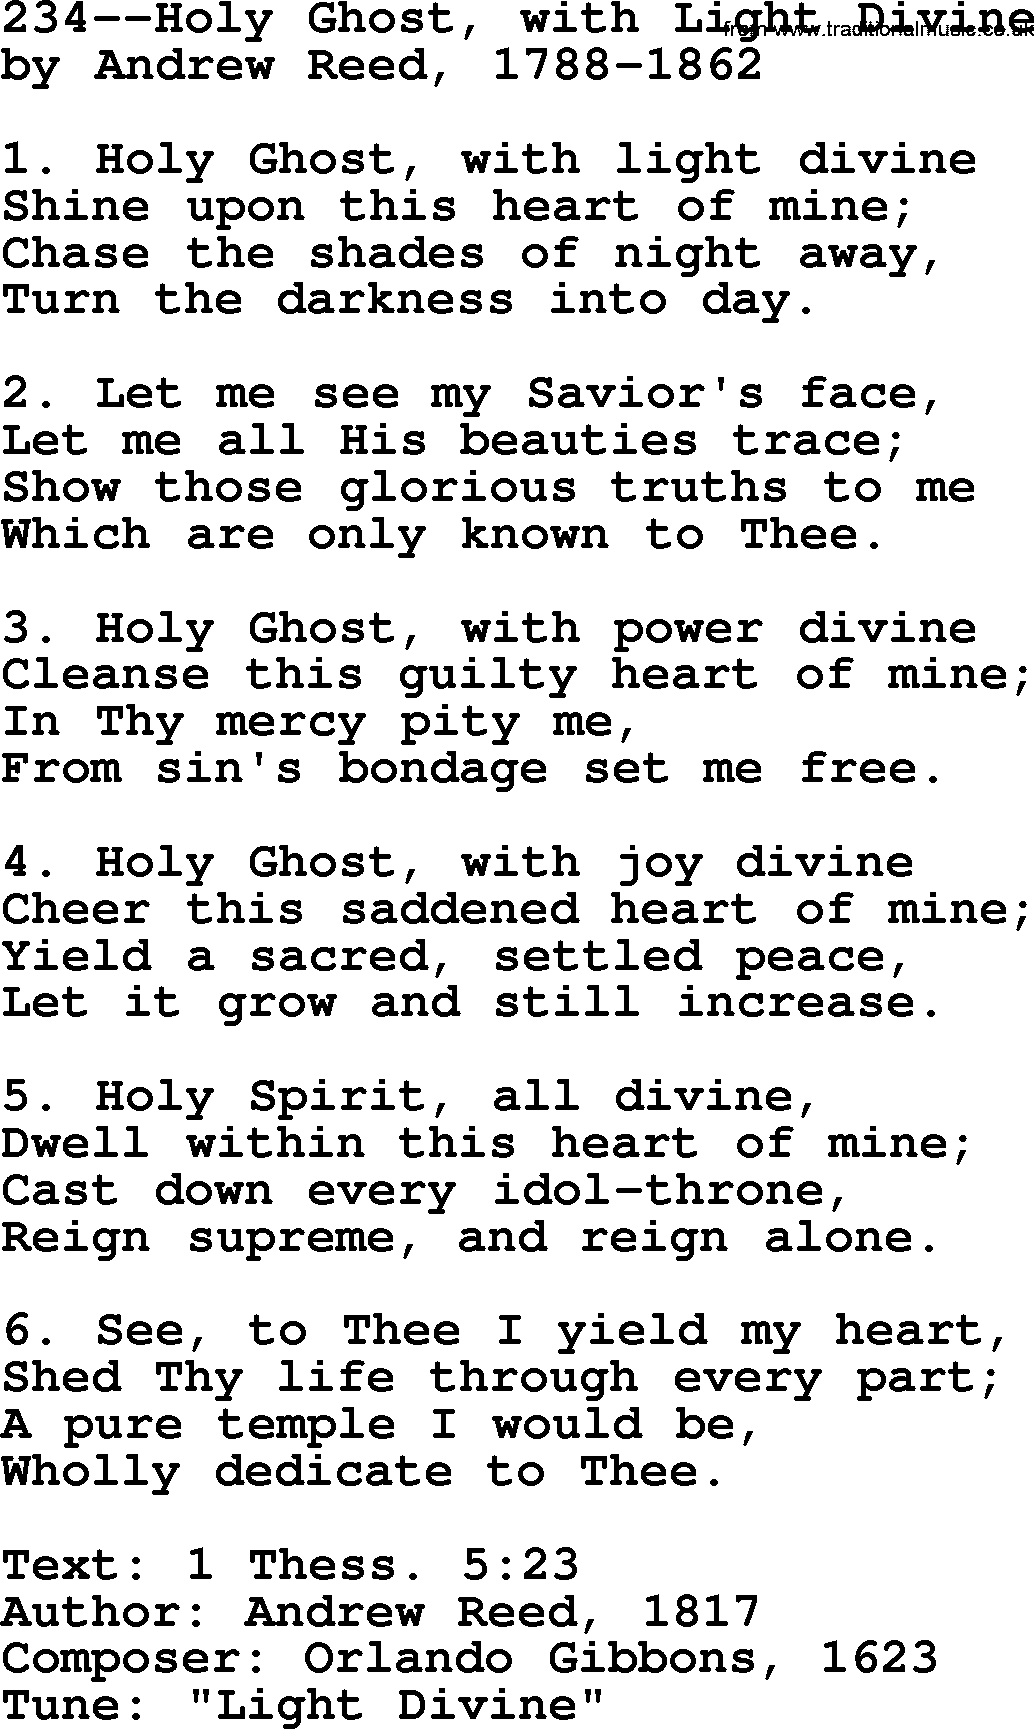 Lutheran Hymn: 234--Holy Ghost, with Light Divine.txt lyrics with PDF